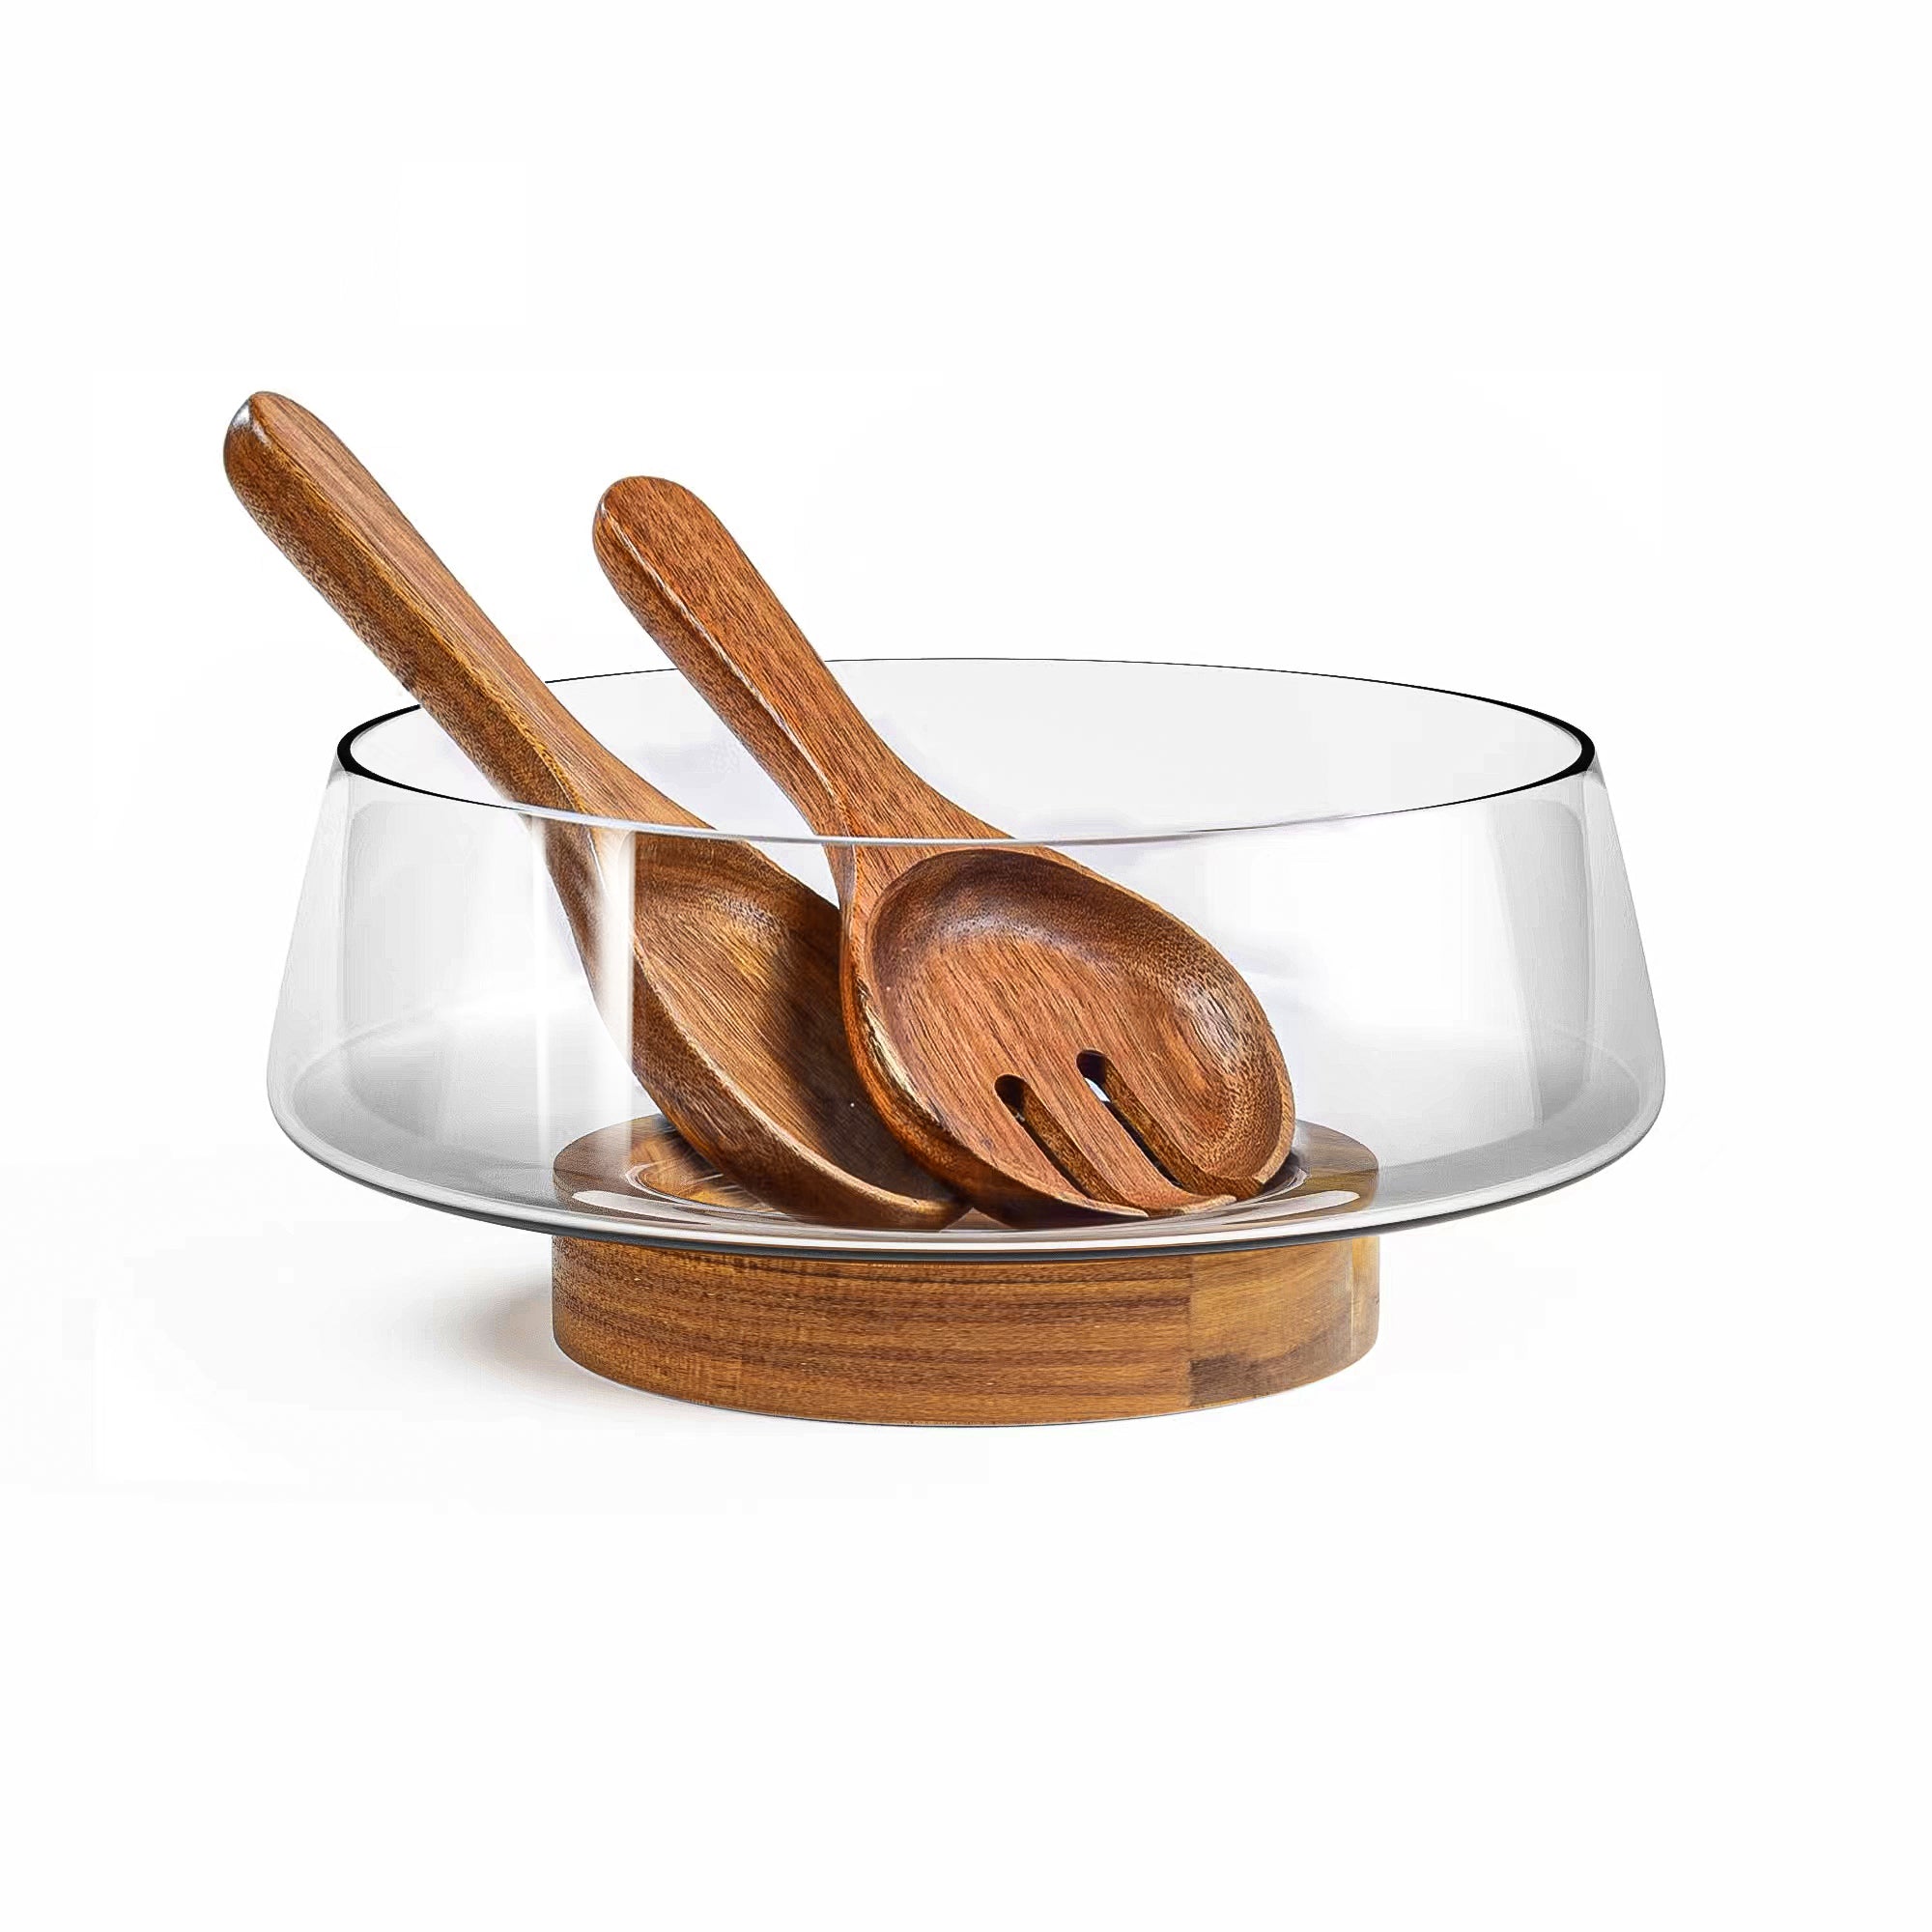 10pc Wood/nylon Kitchen Utensil Set Brown - Figmint™ : Target